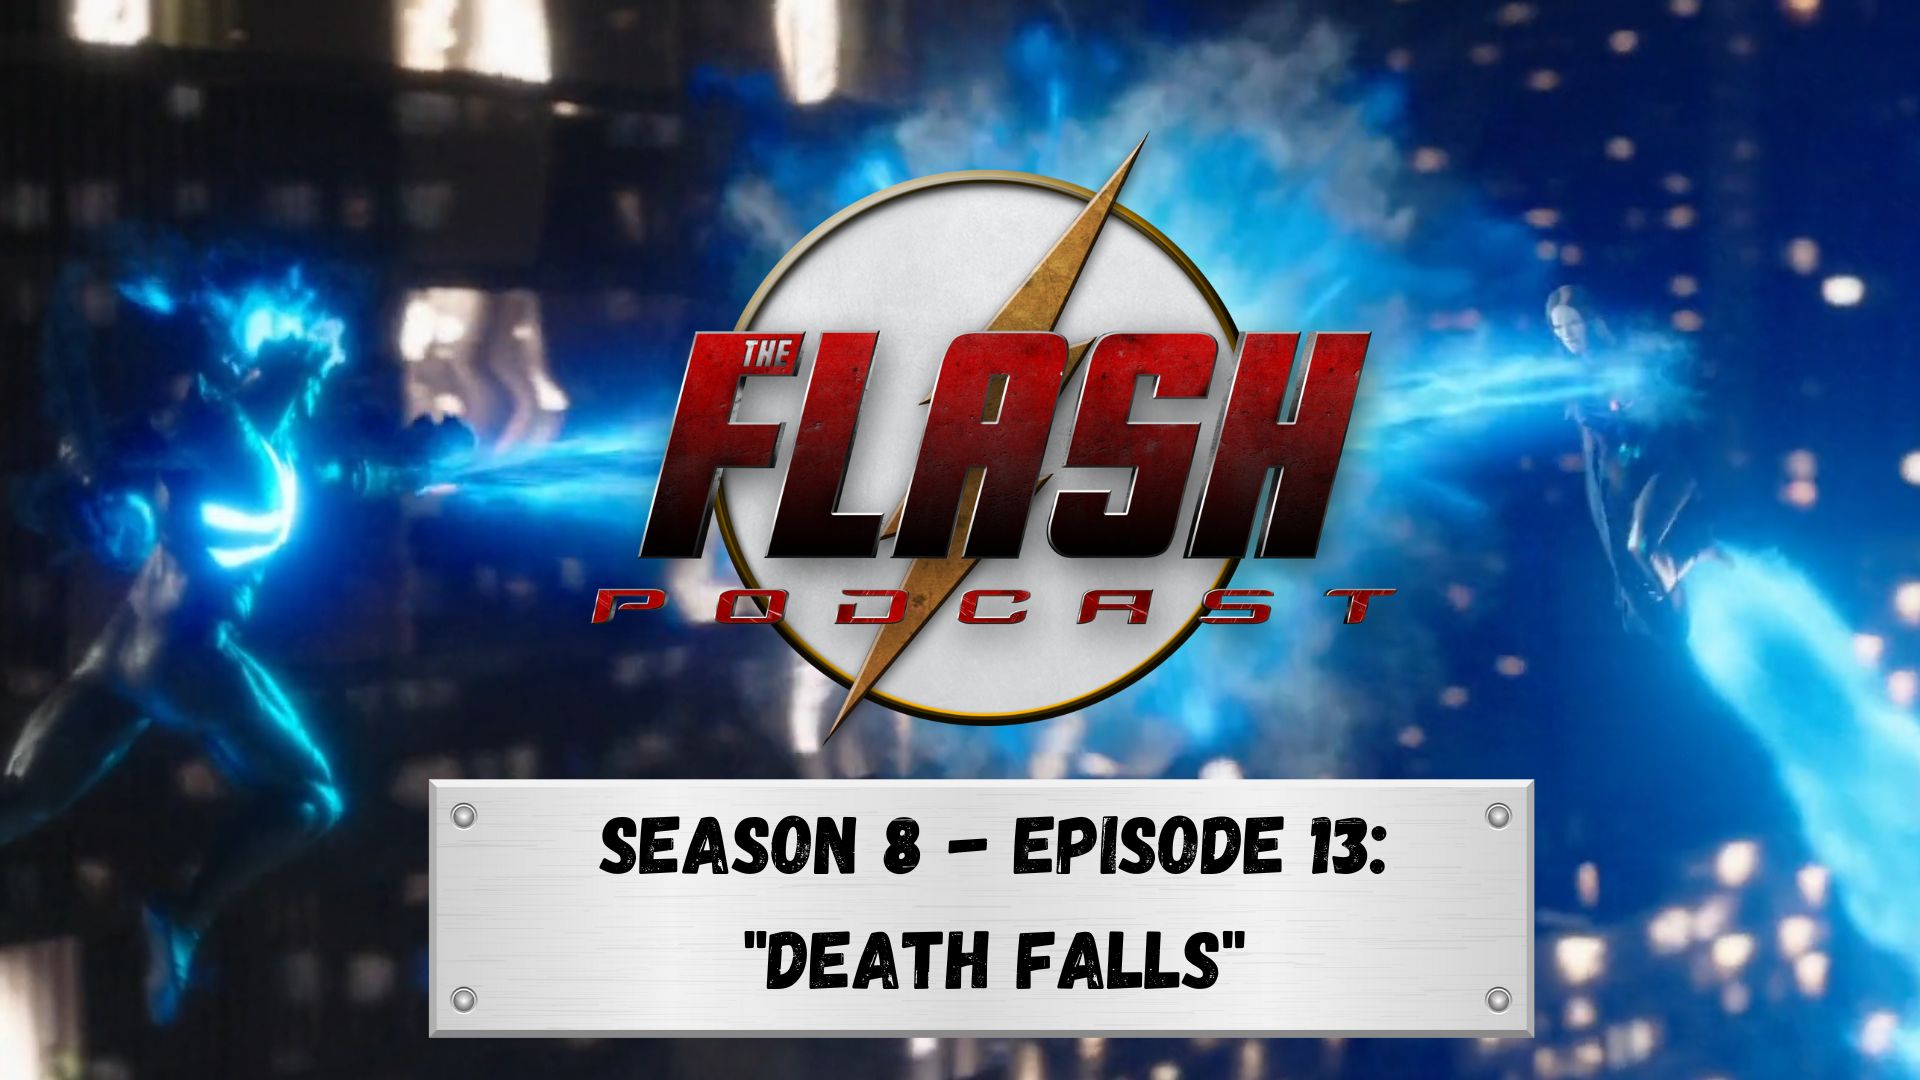 The Flash Podcast SEASON 8 - EPISODE 13 DEATH FALLS